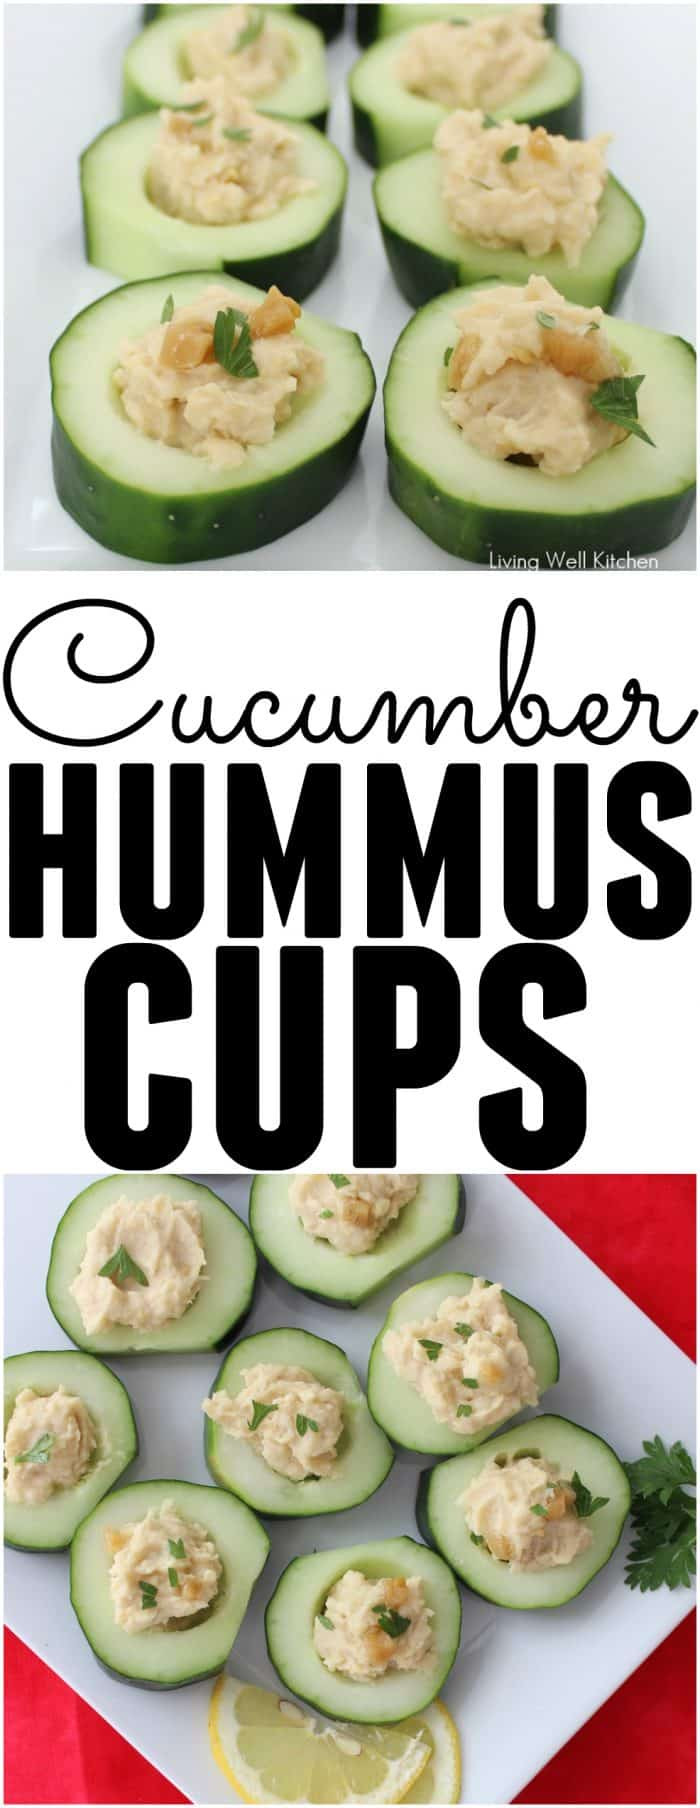 Vegan Gluten Free Appetizers
 Cucumber Hummus Cups